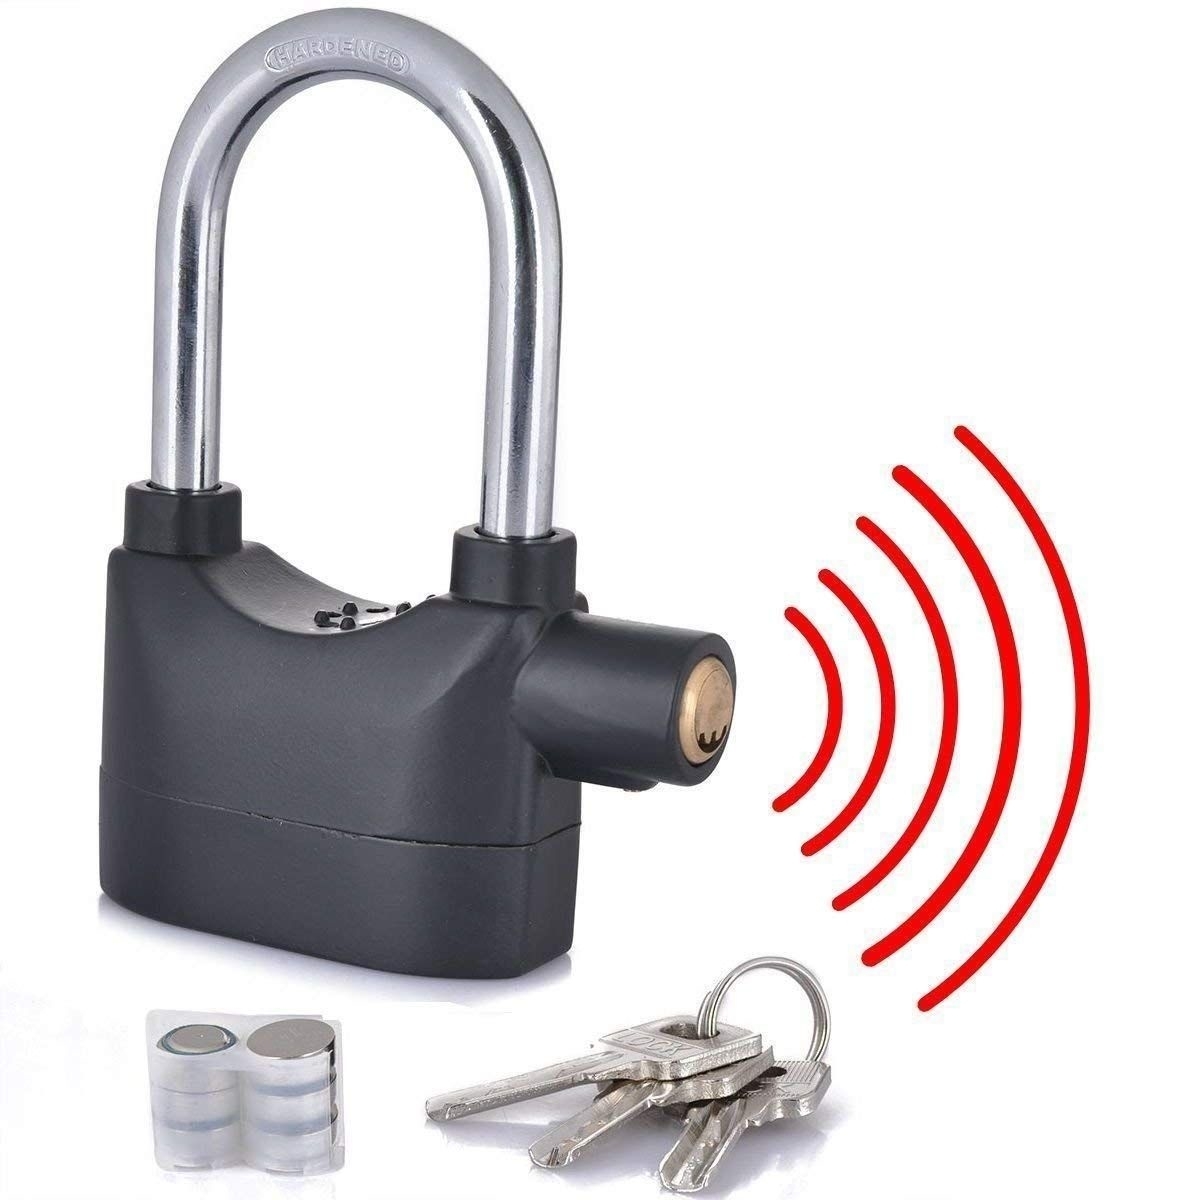 JonPrix Loud Silent Alarm Lock Anti Theft Security Alarm